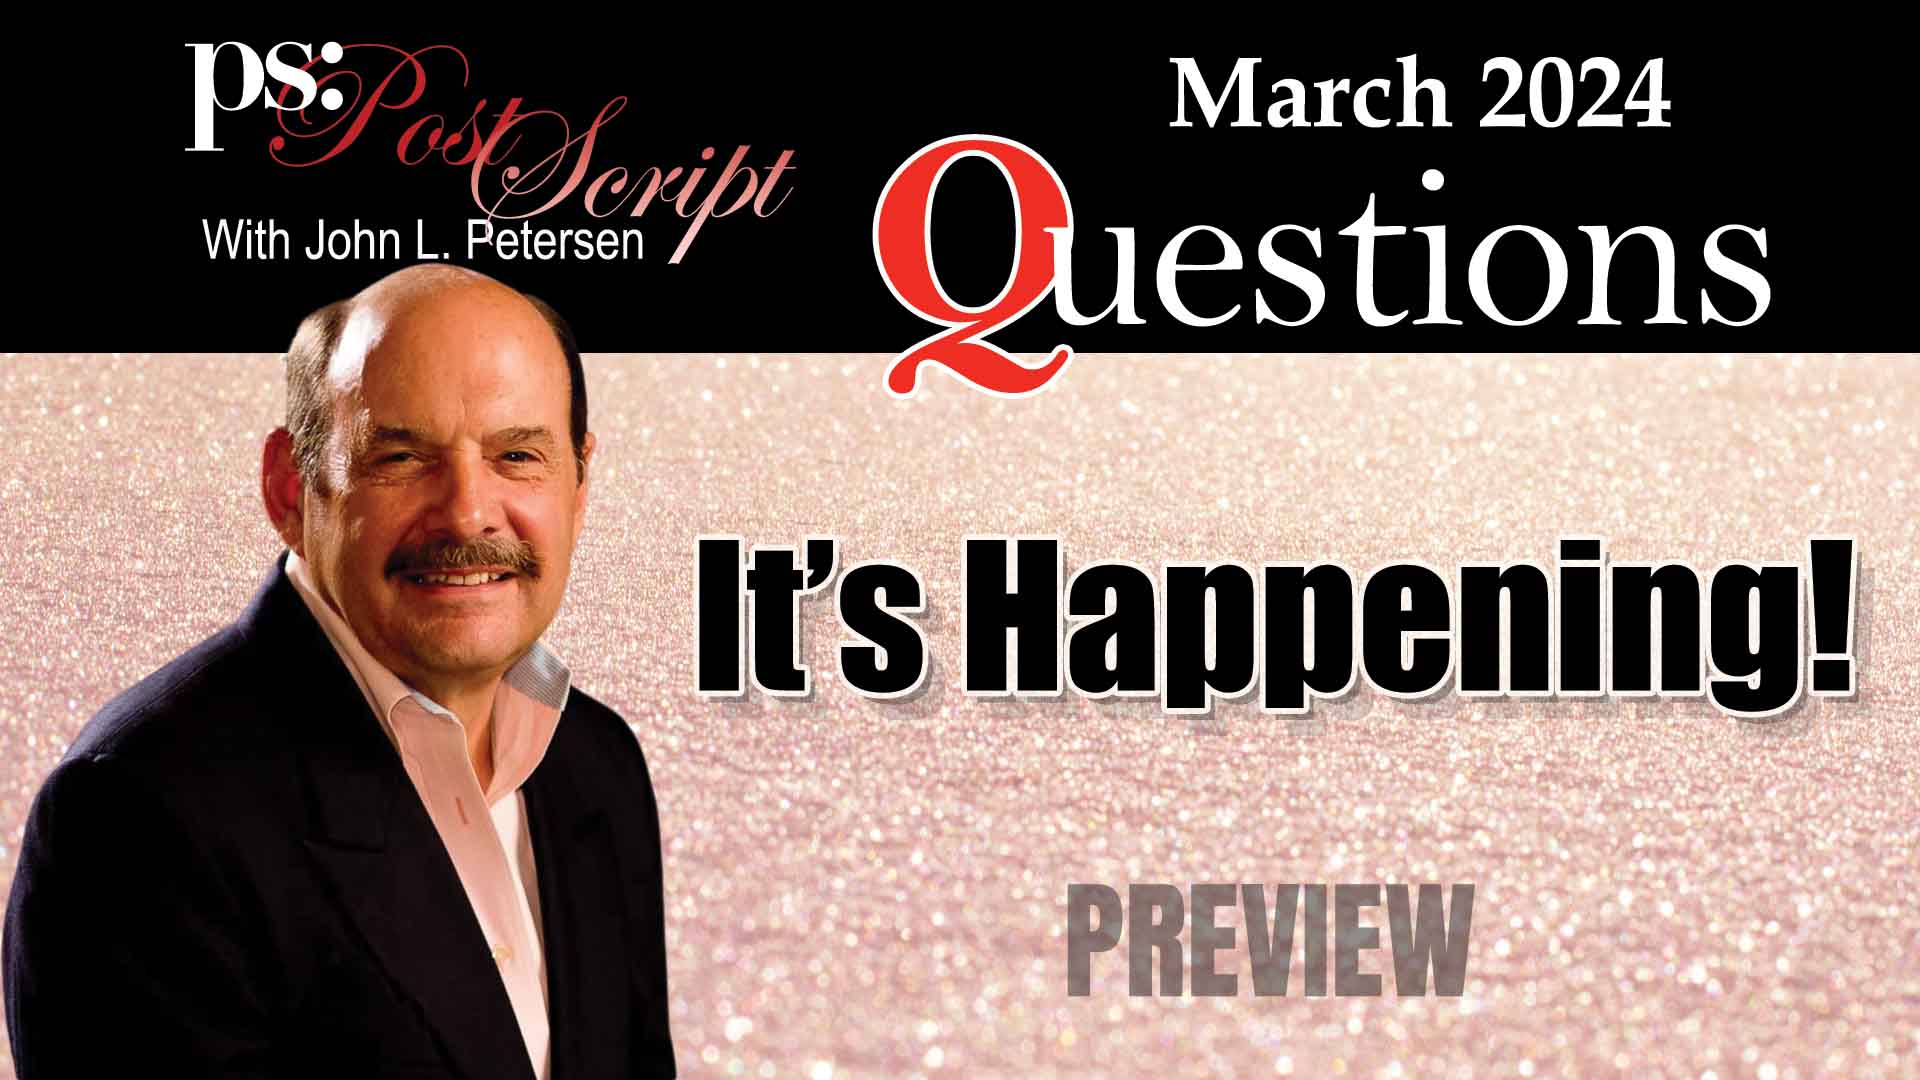 It's Happening! PostScript Questions March 2024